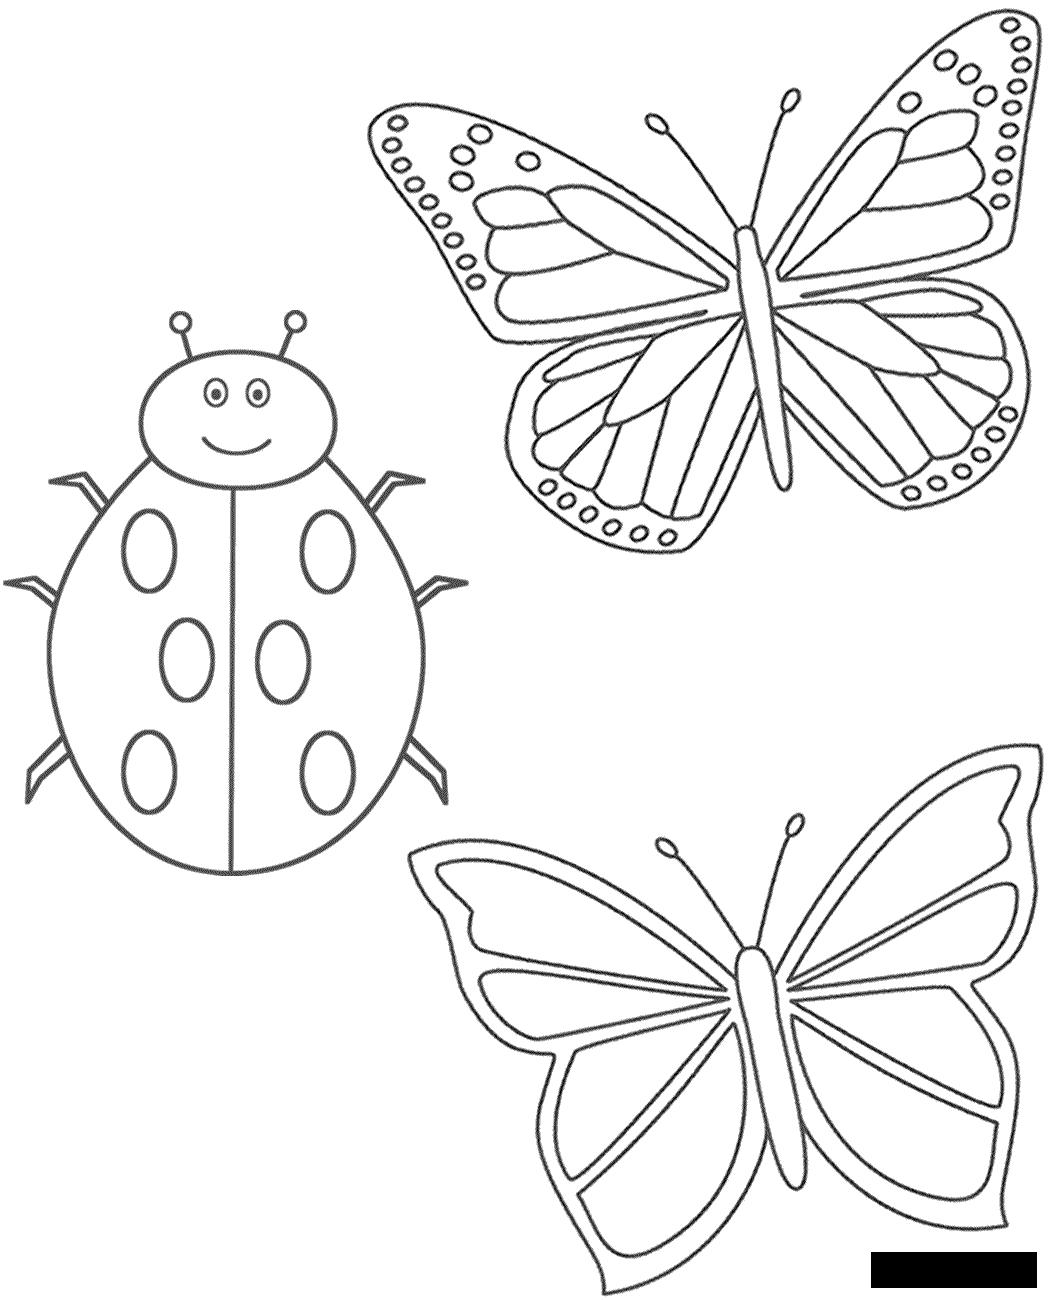 Розмальовки Комахи дитячі розмальовки, розмальовки для самих маленьких, комахи, метелик, гусінь